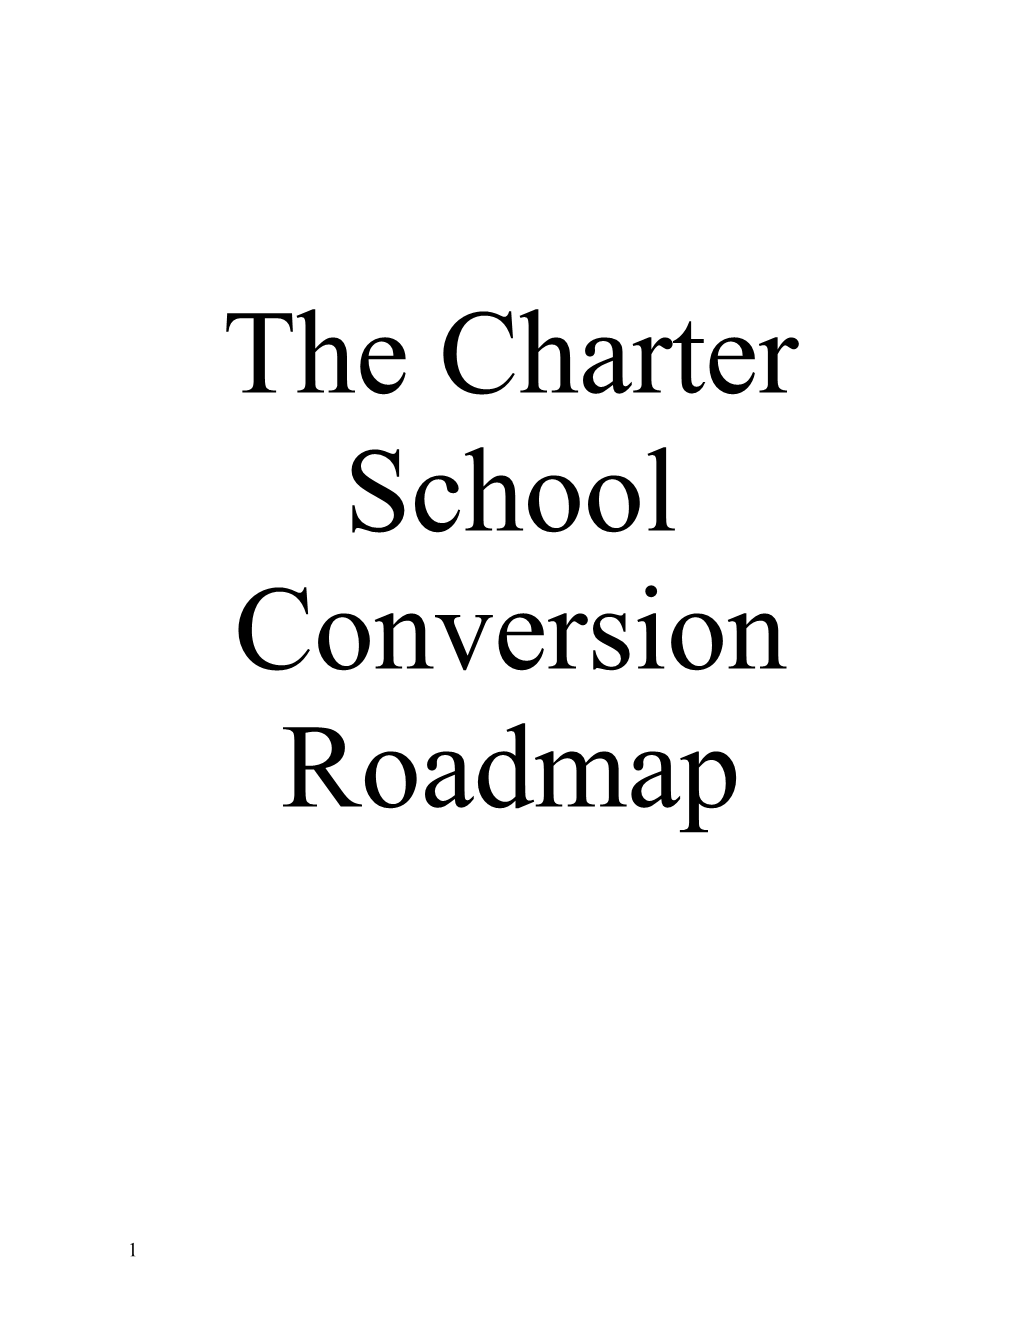 The Charter School Conversion Roadmap